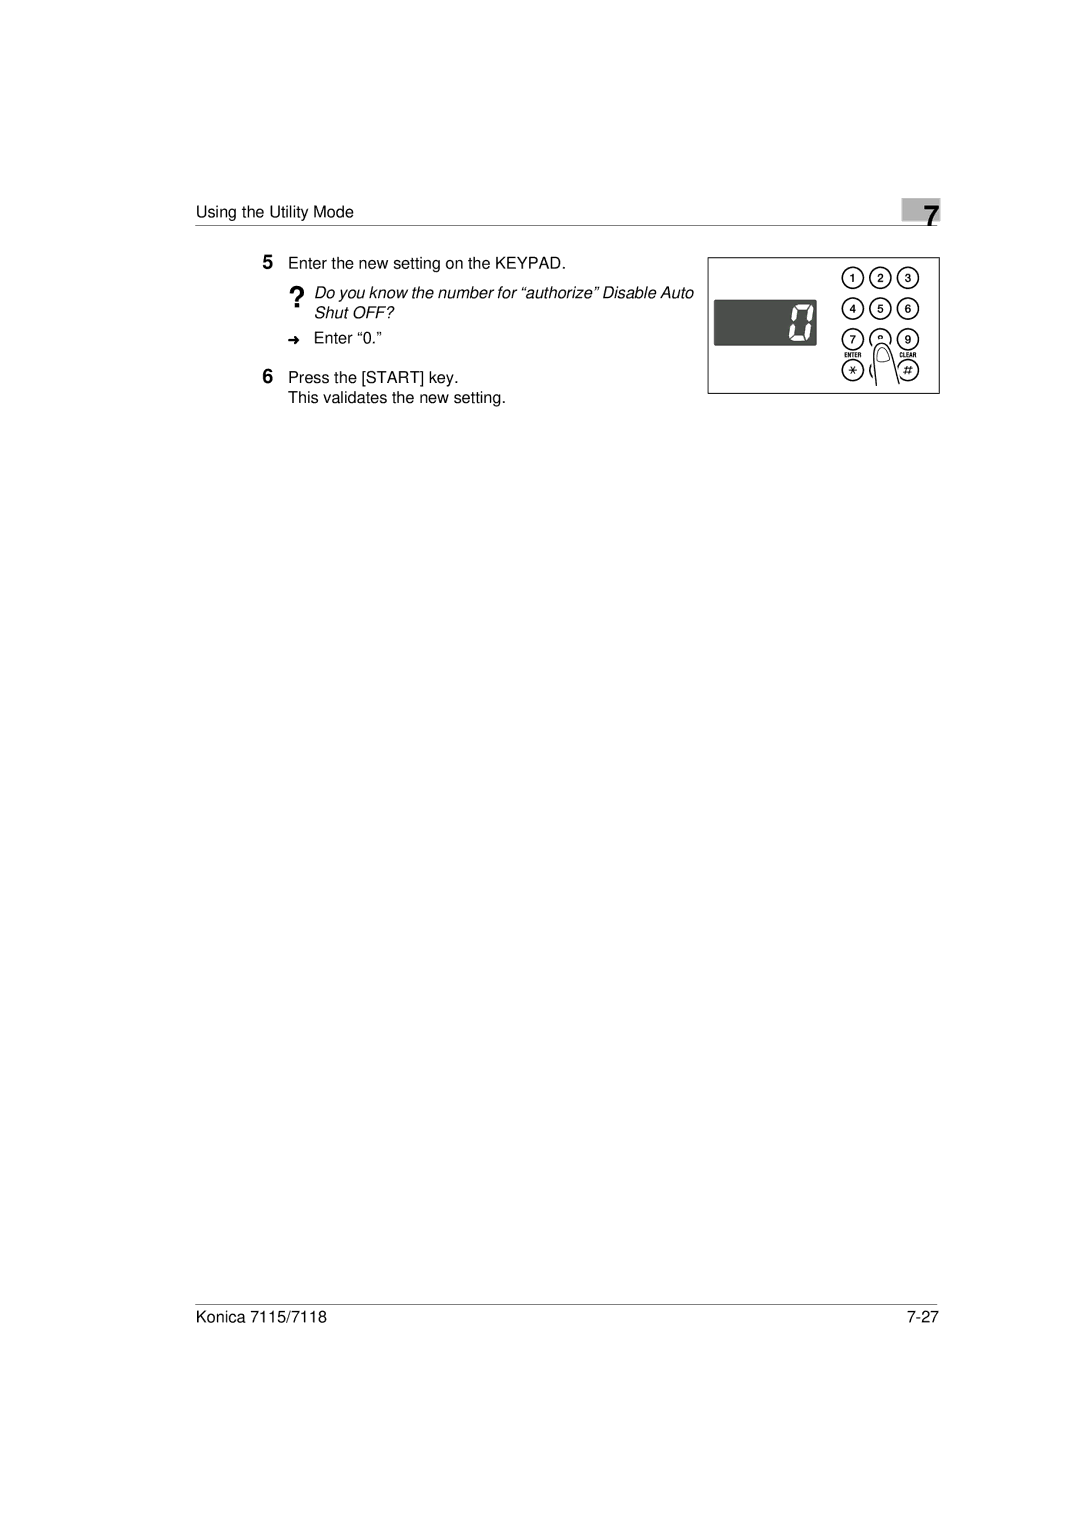 Konica Minolta Printer Copier manual Using the Utility Mode Enter the new setting on the Keypad 